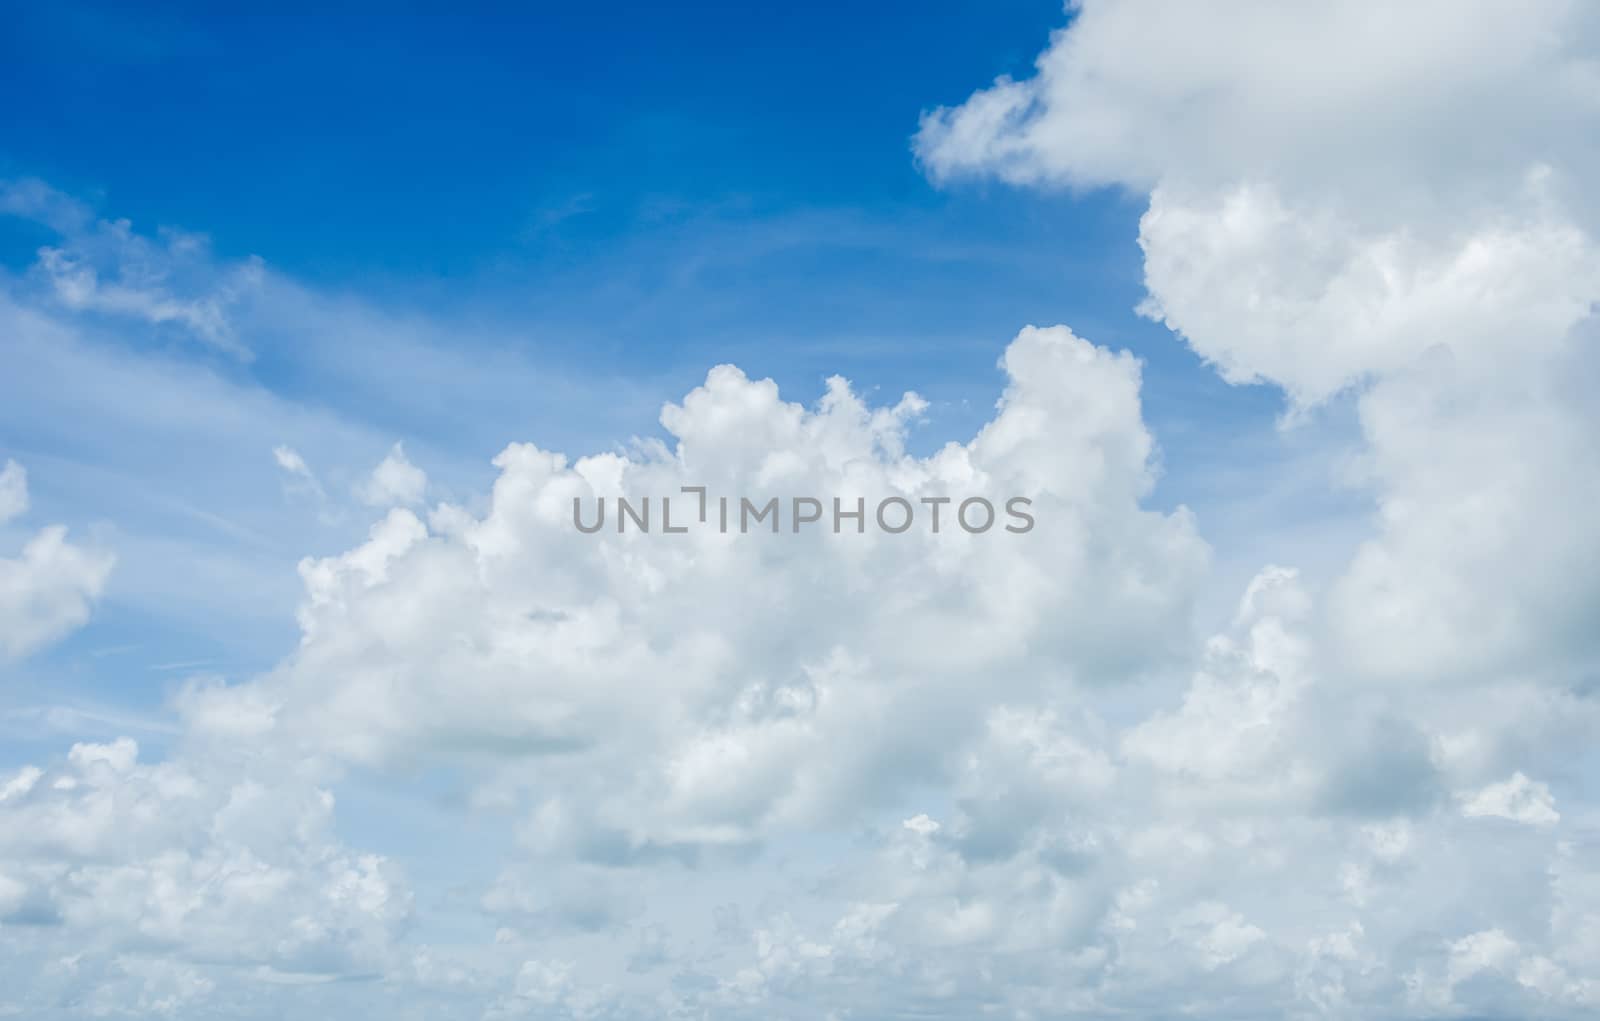 Nice cloud in blue sky by pixbox77